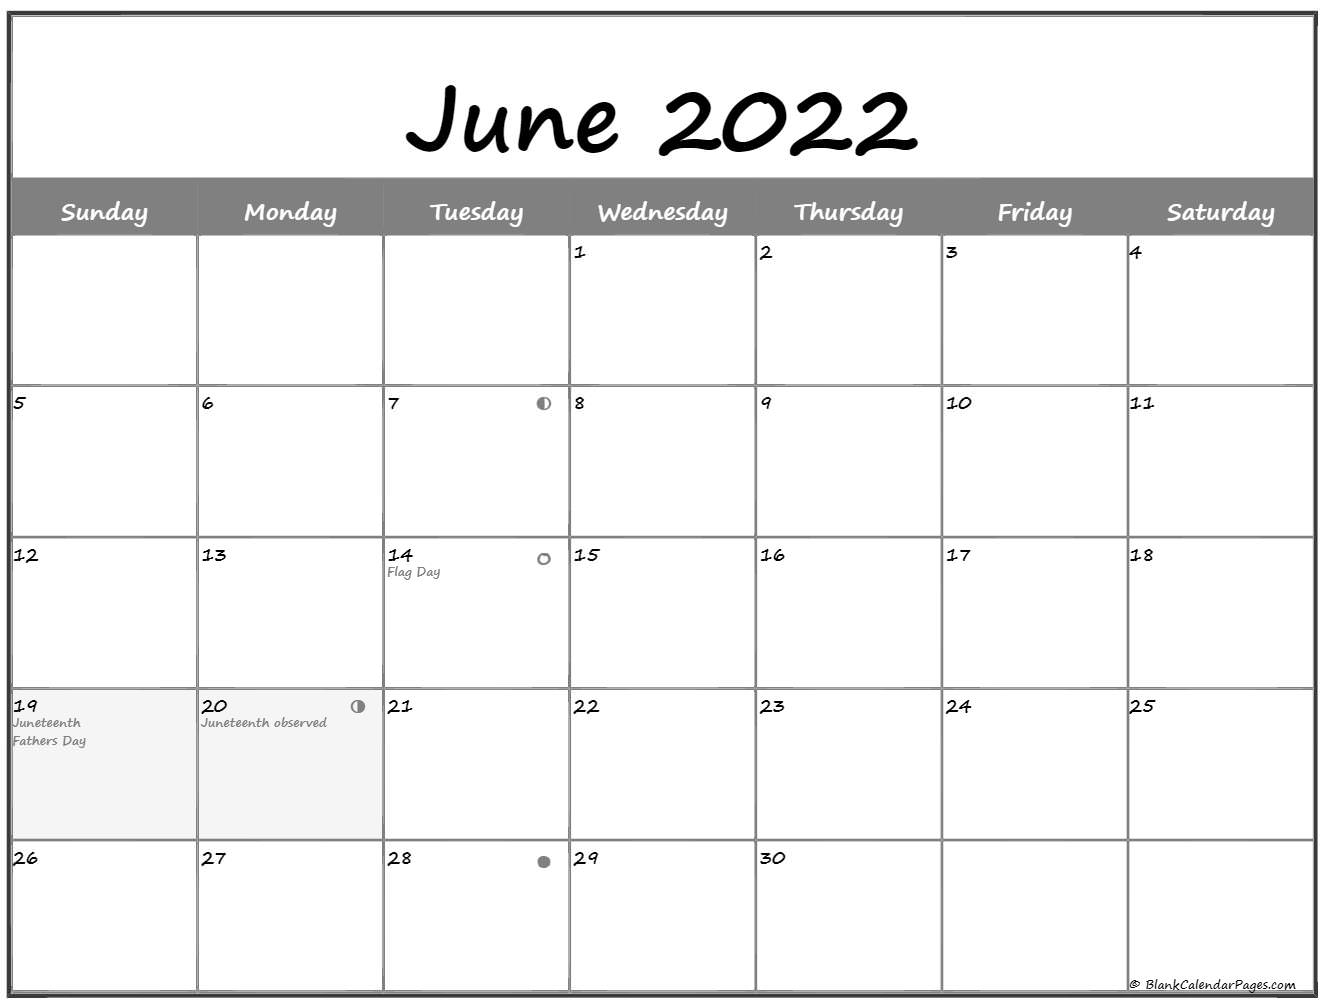 June 2022 Lunar Calendar | Moon Phase Calendar